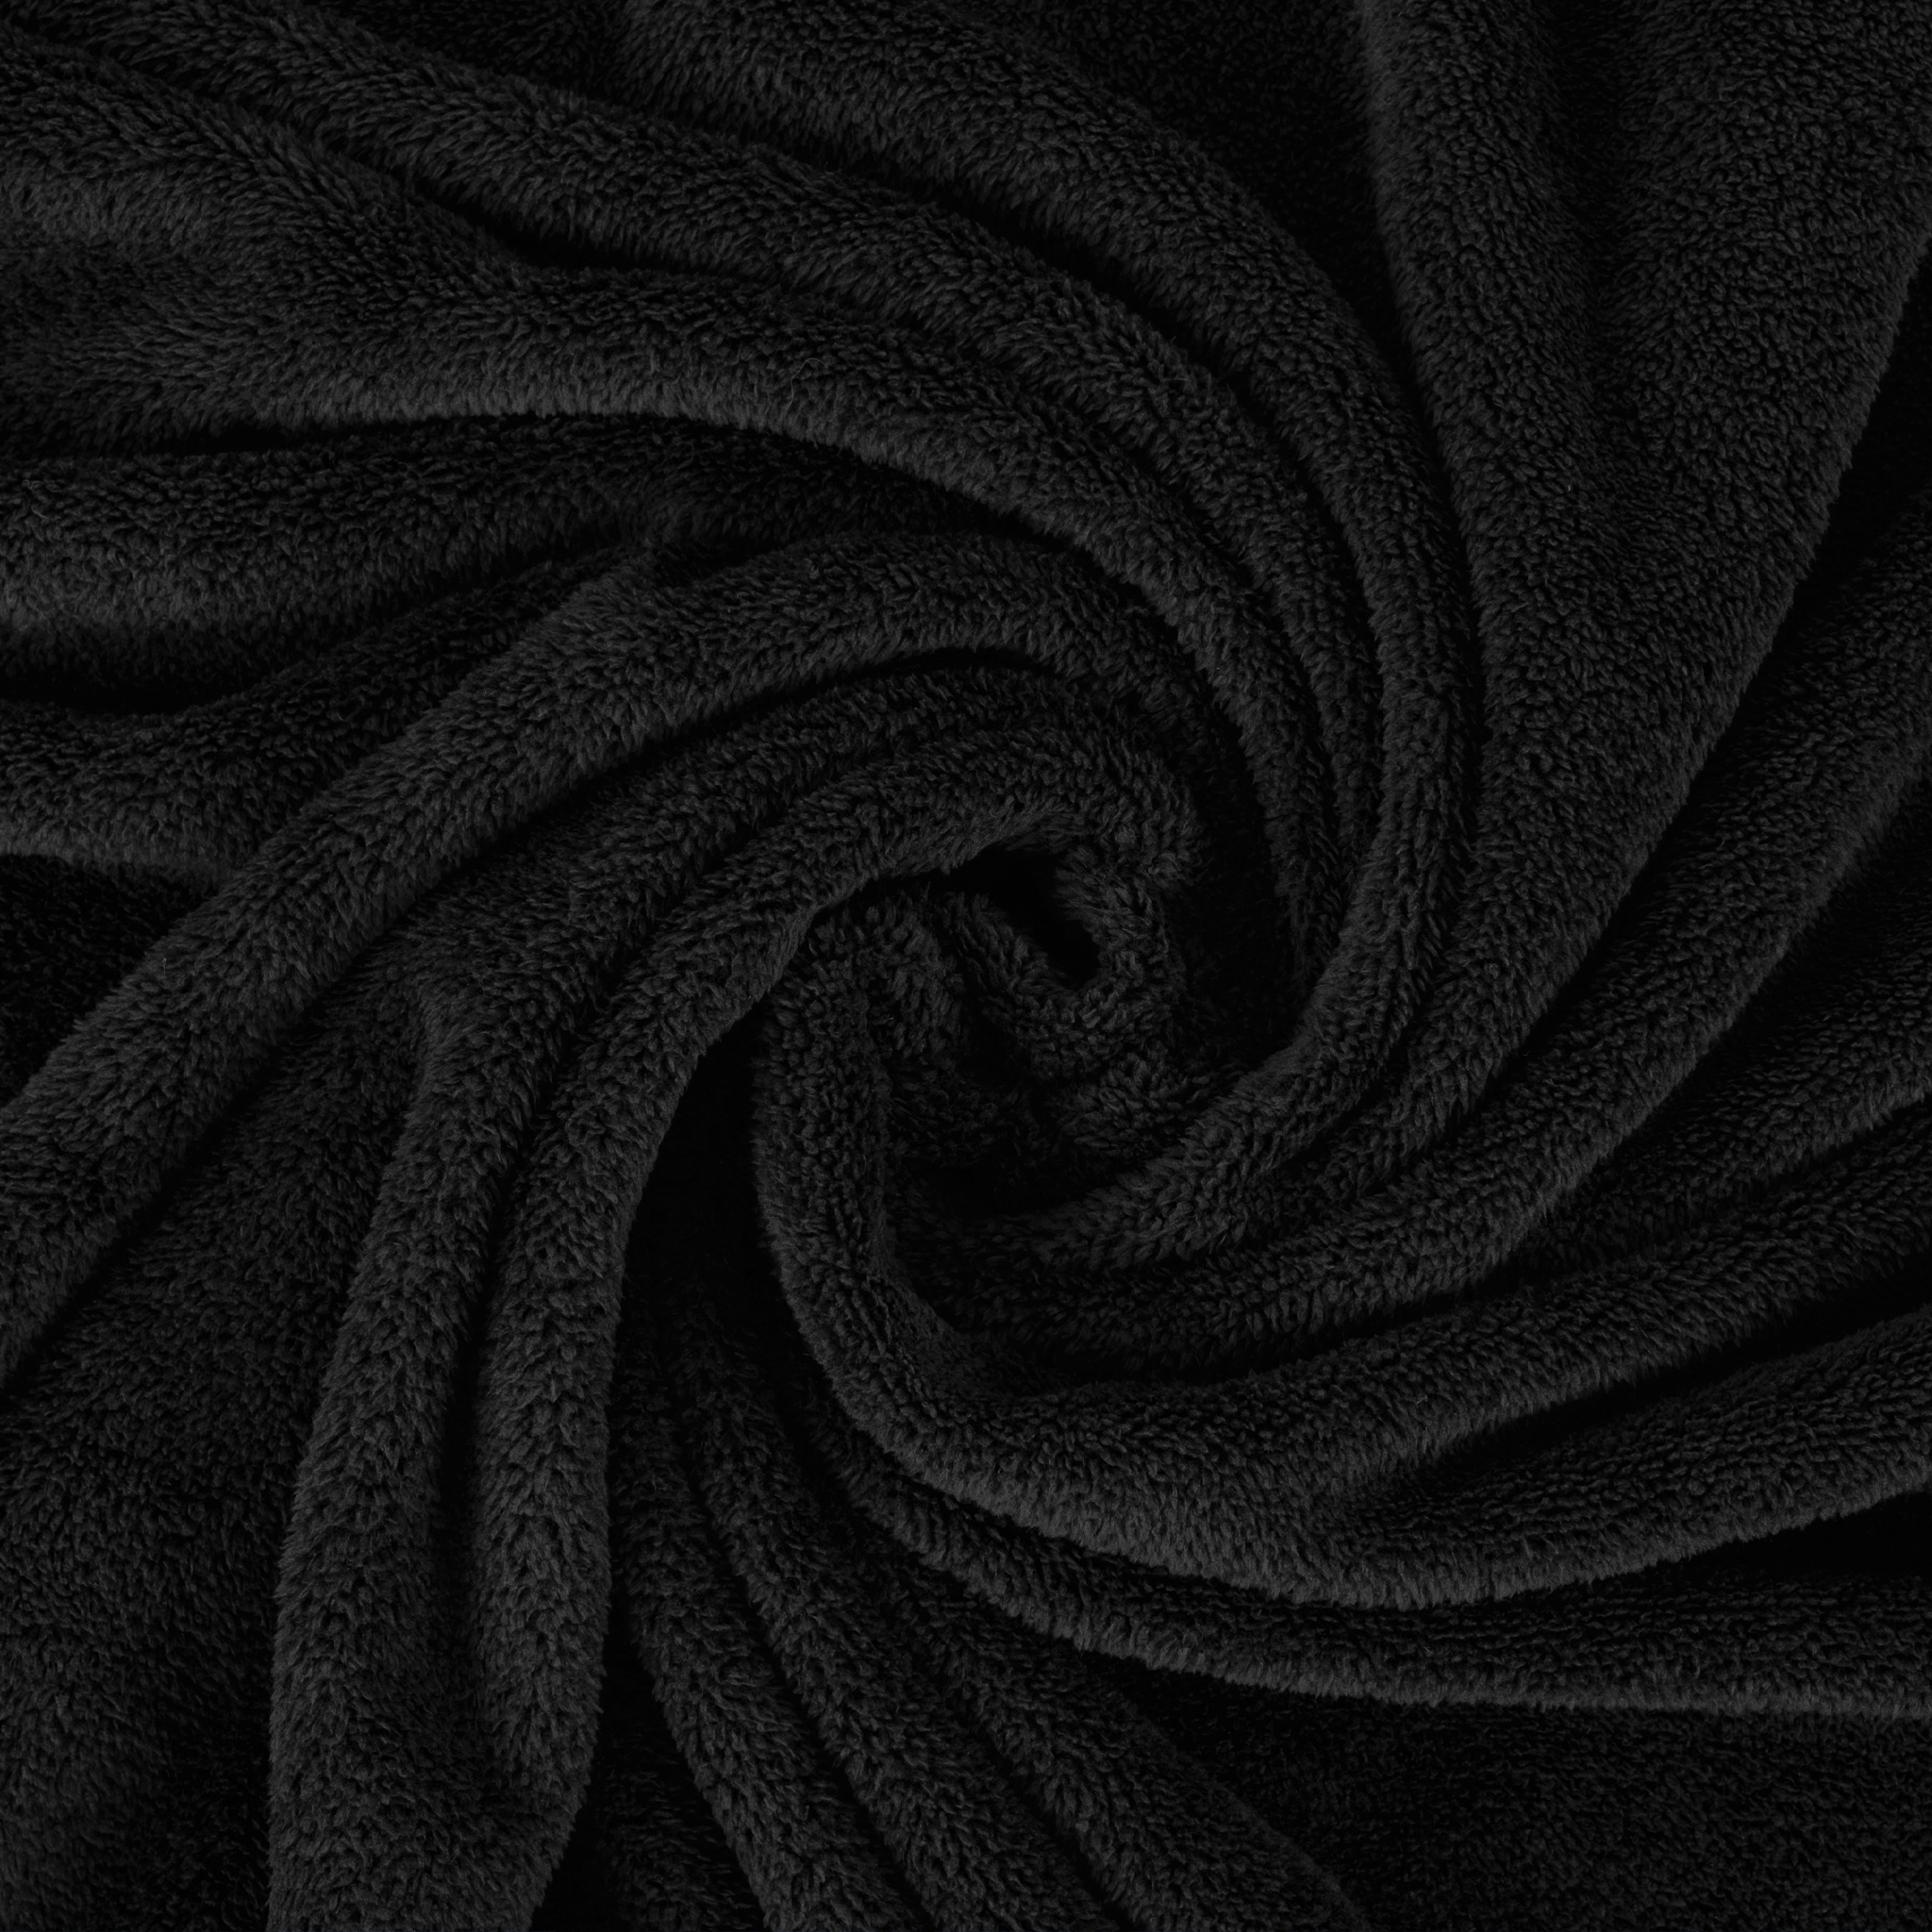 American Soft Linen - Bedding Fleece Blanket - Wholesale - 15 Set Case Pack - Twin Size 60x80 inches - Black - 5